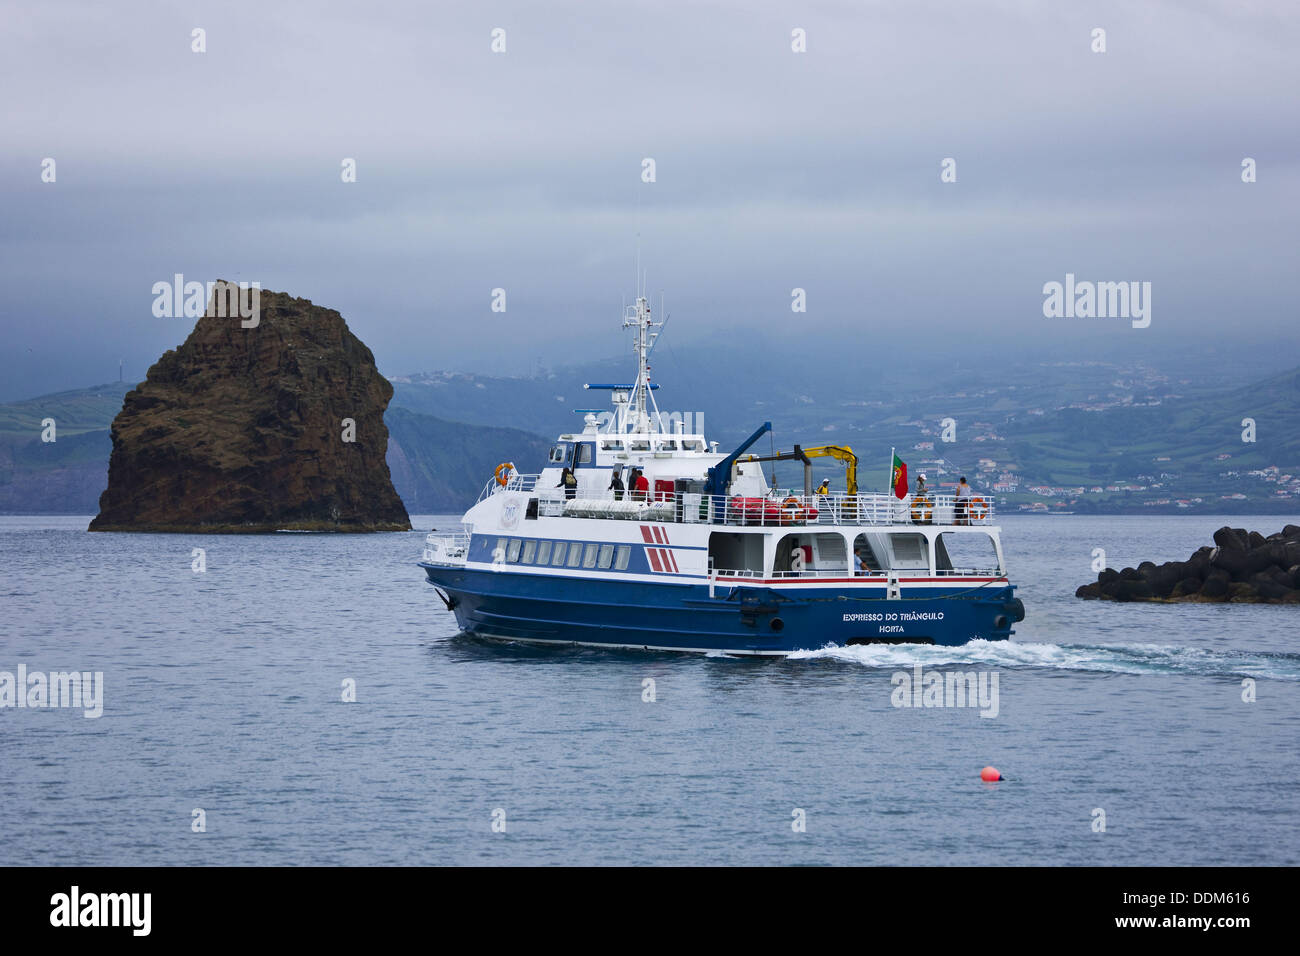 Boat, rocks and Madalena in background, Pico Island, Azores, Portugal Stock Photo